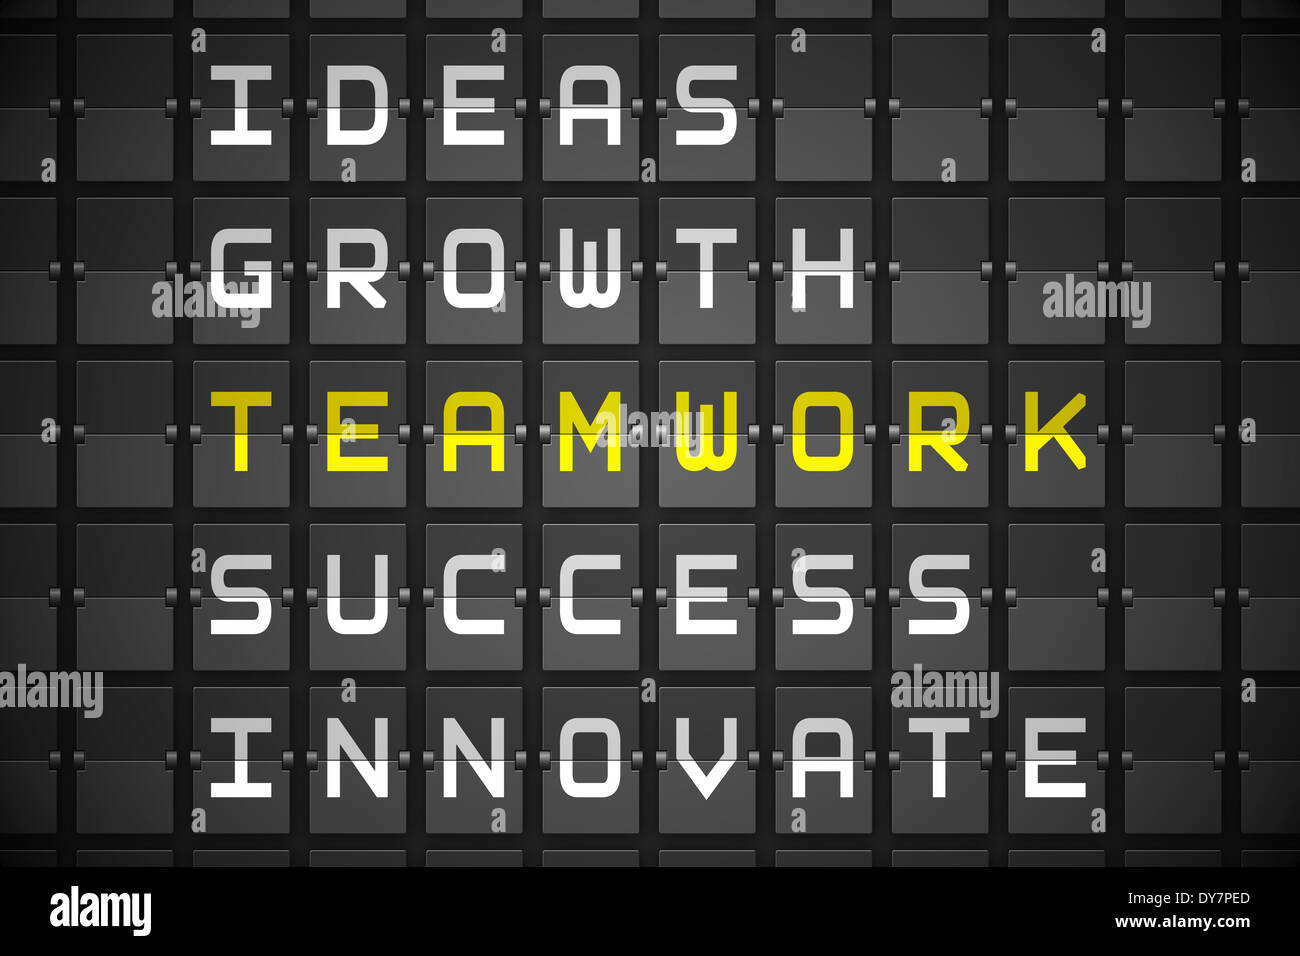 Teamwork buzzwords on black mechanical board Stock Photo